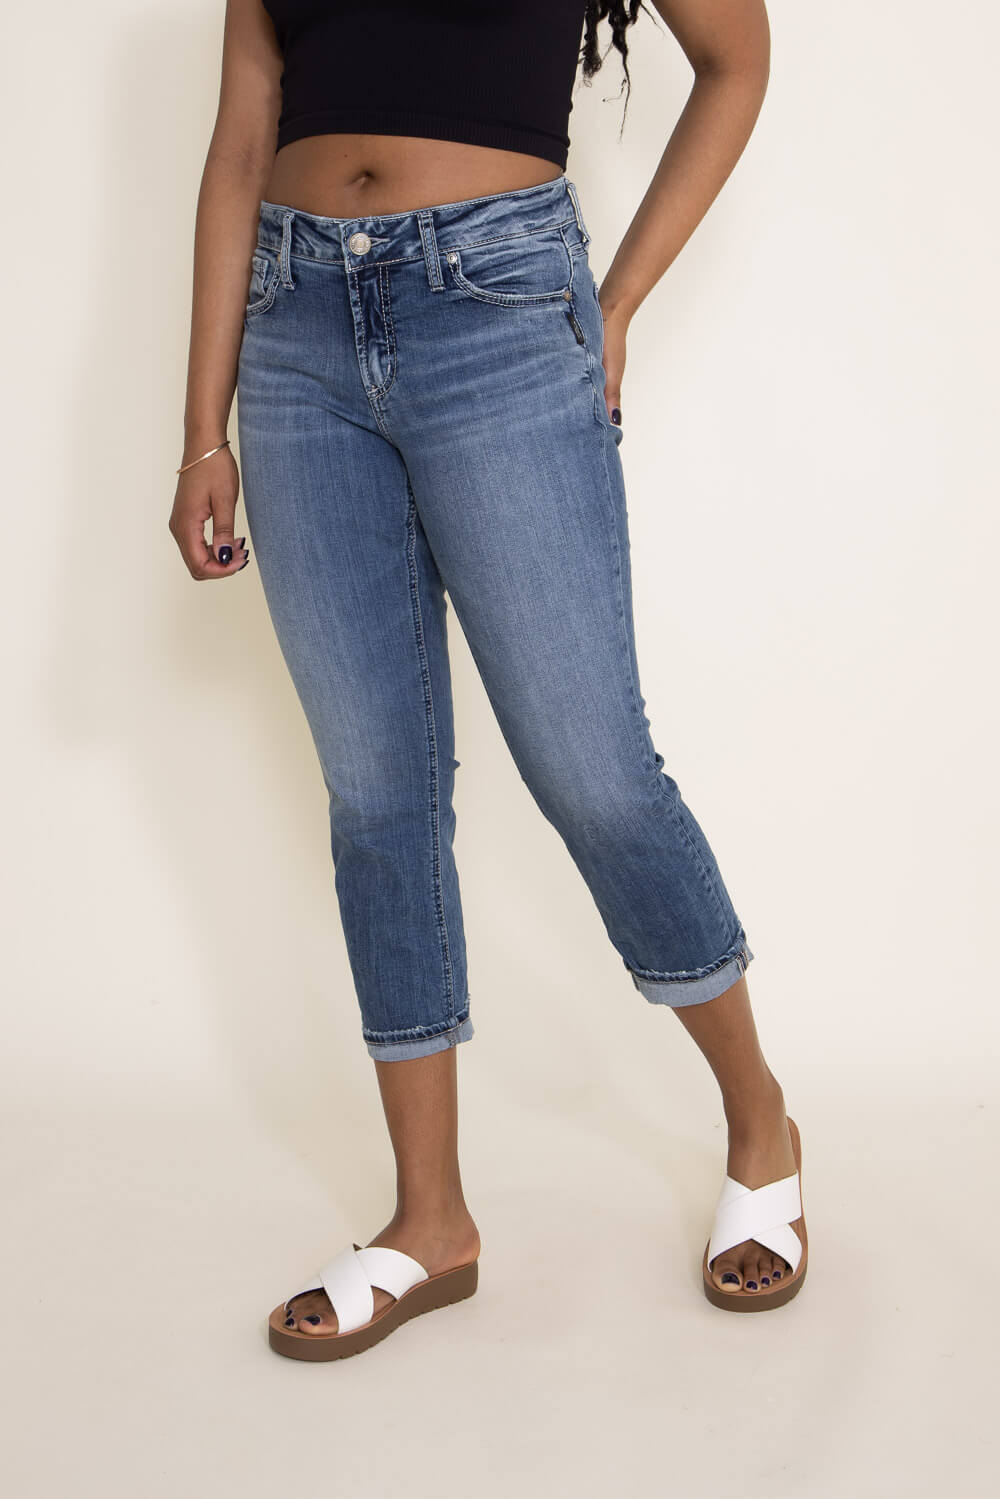 Gloria Vanderbilt Women's Capri Jeans~Pockets Rhinestones Blue~Sz  12~BLING!! | eBay